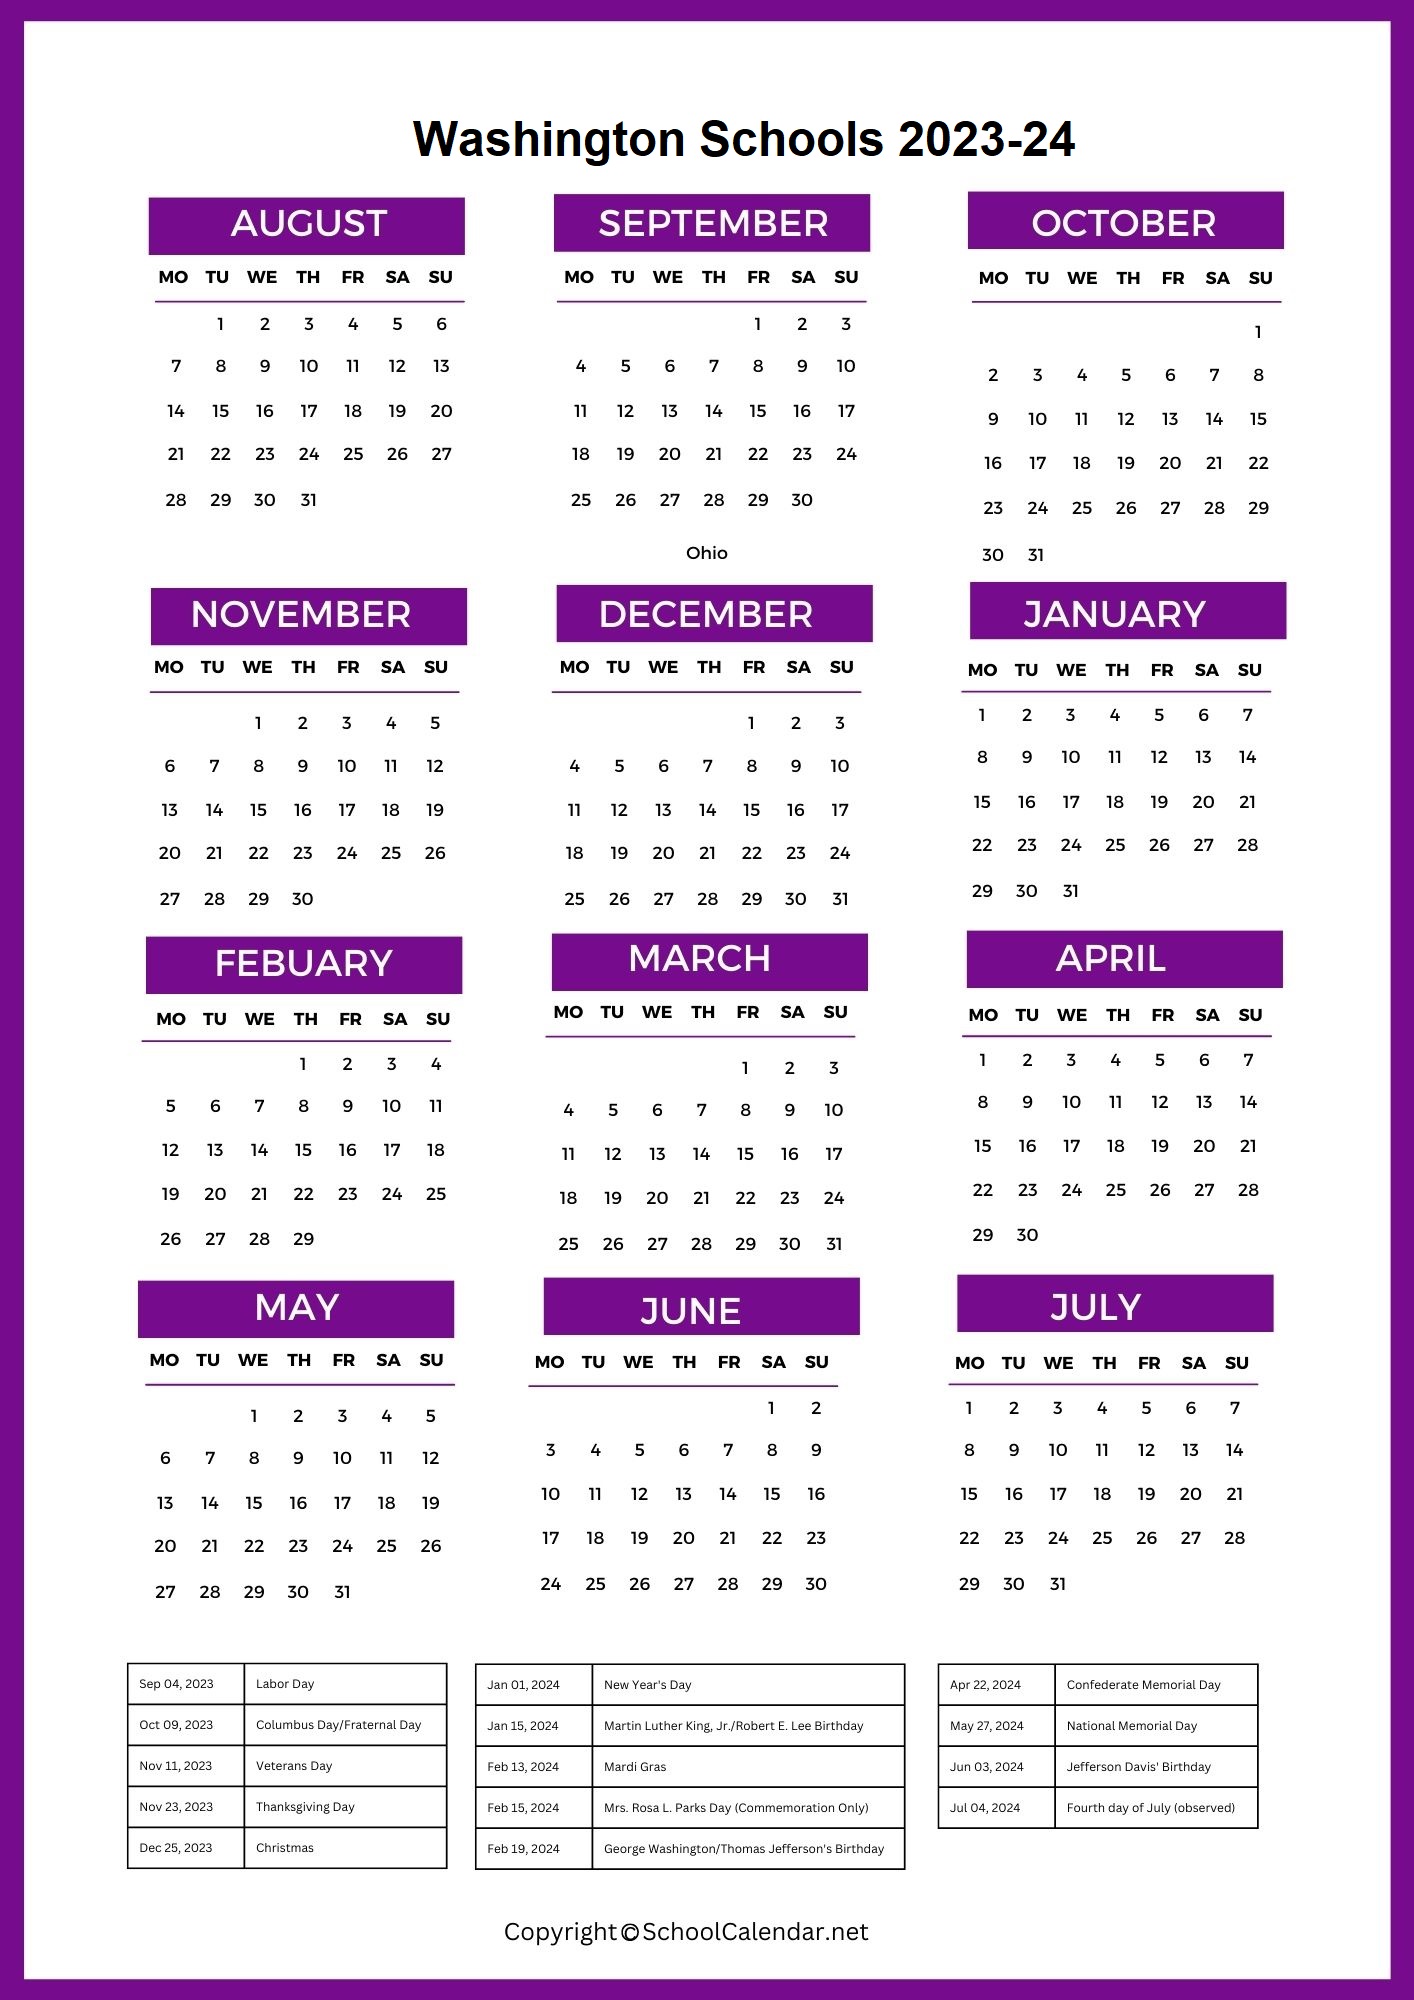 Washington School Calendar 2023